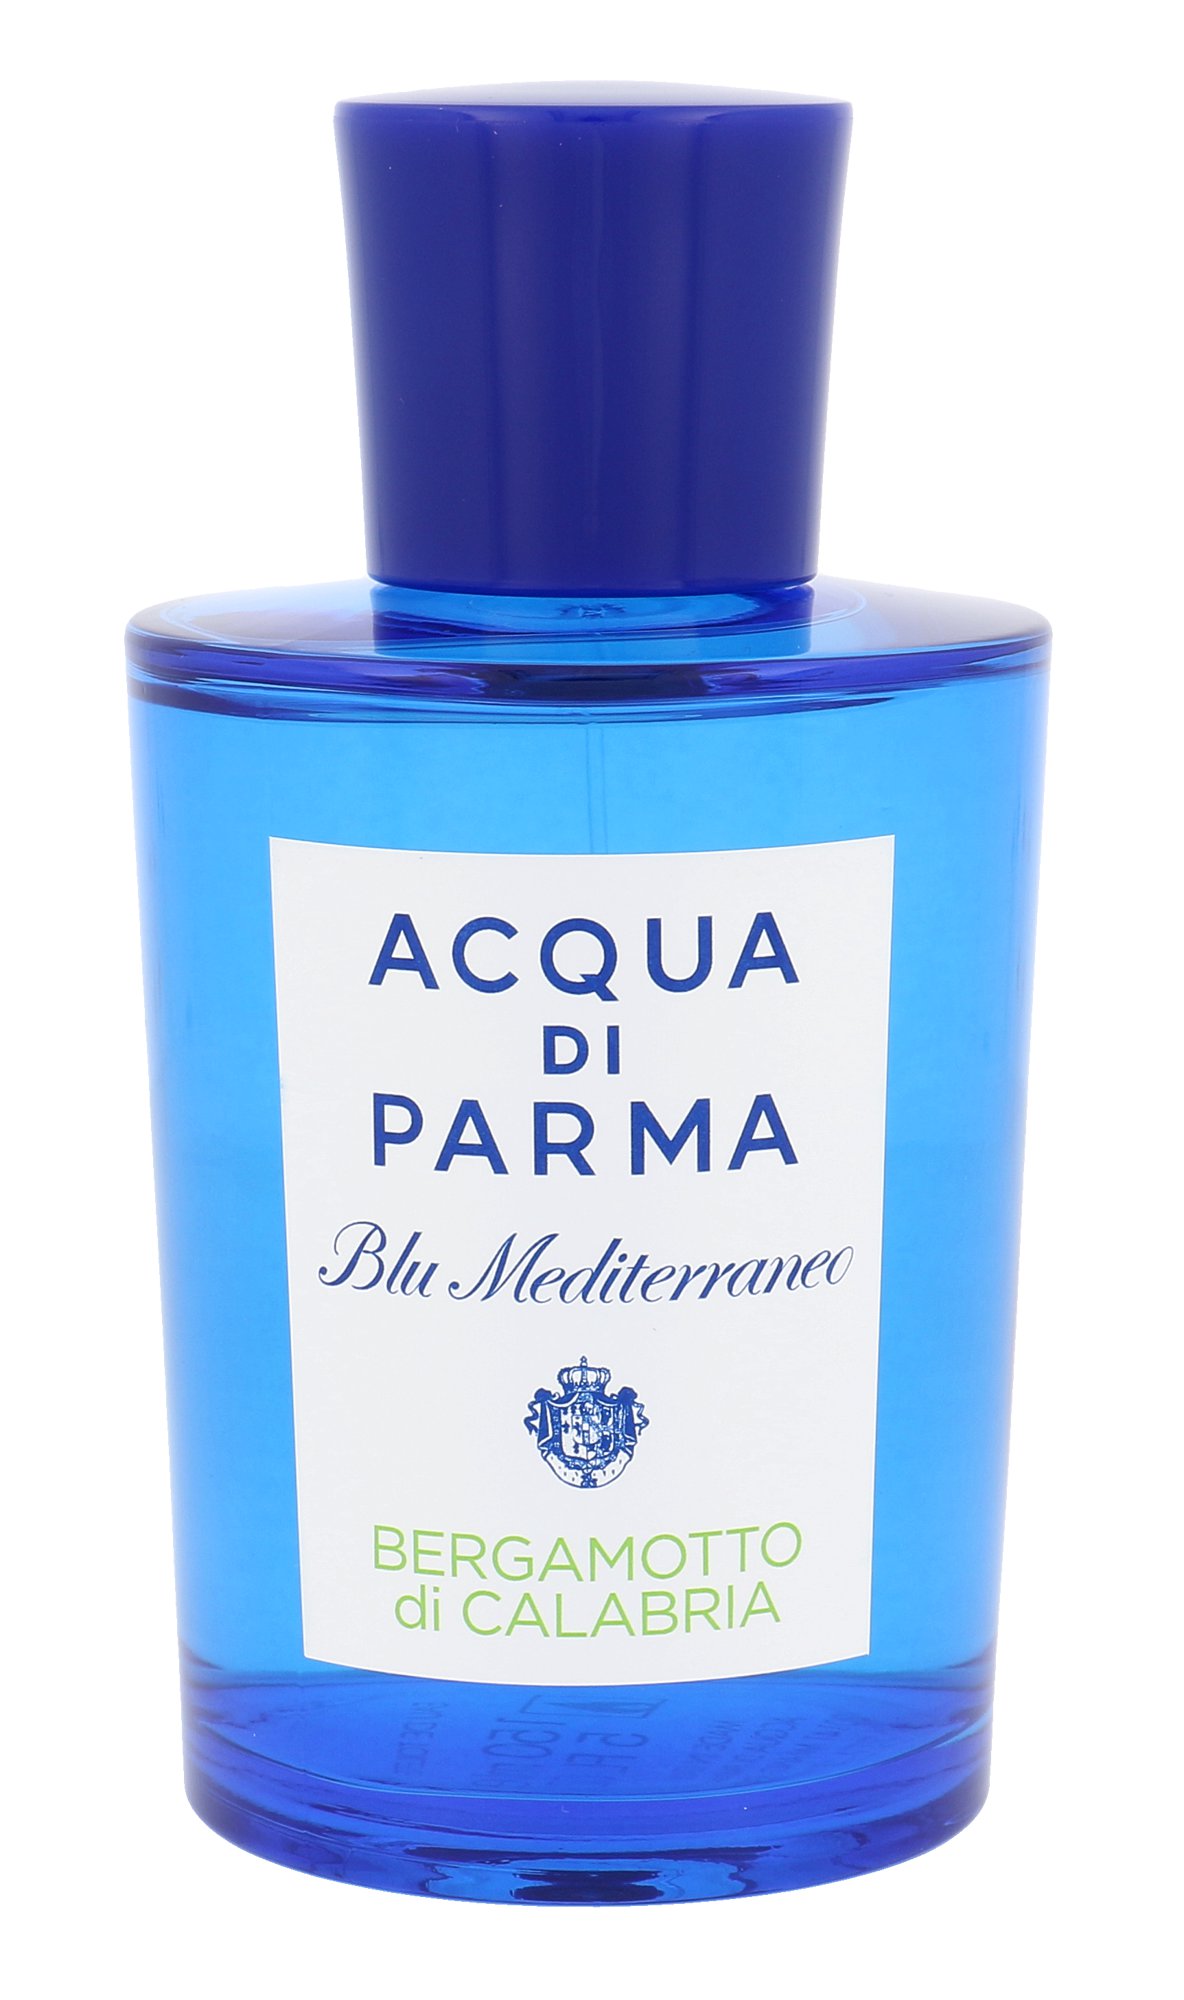 Acqua di Parma Blu Mediterraneo Bergamotto di Calabria, Toaletní voda 150ml